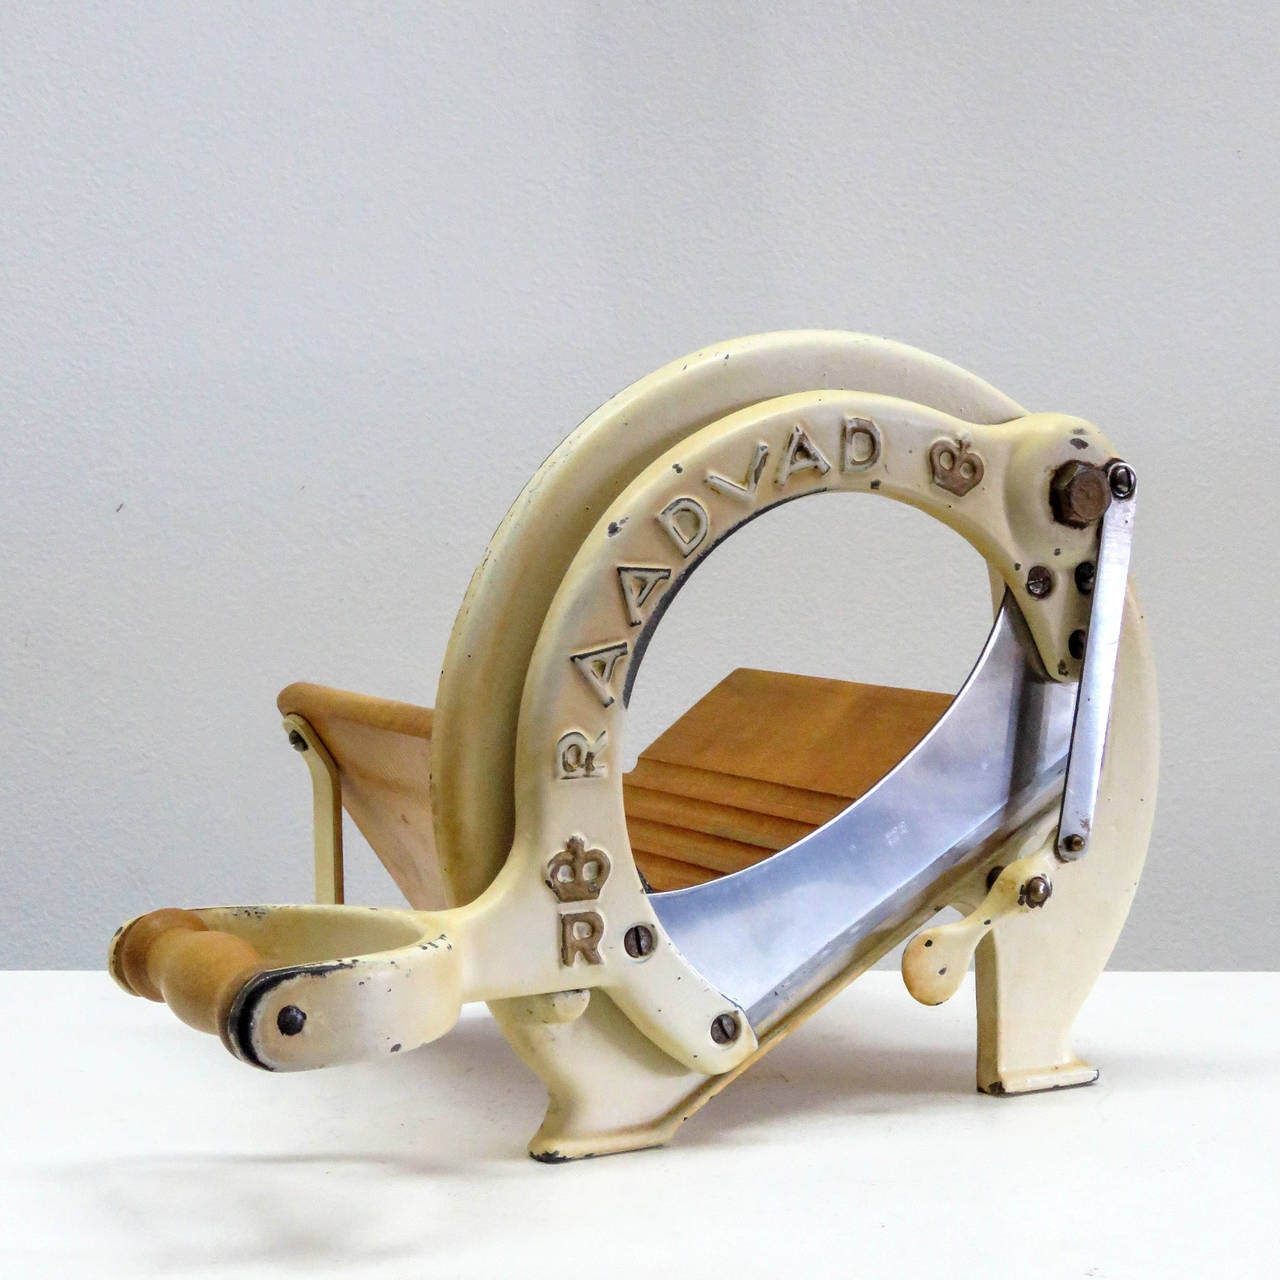 Sharp looking bread slicer by famous Danish design company Raadvad, old short version model no 294 (10